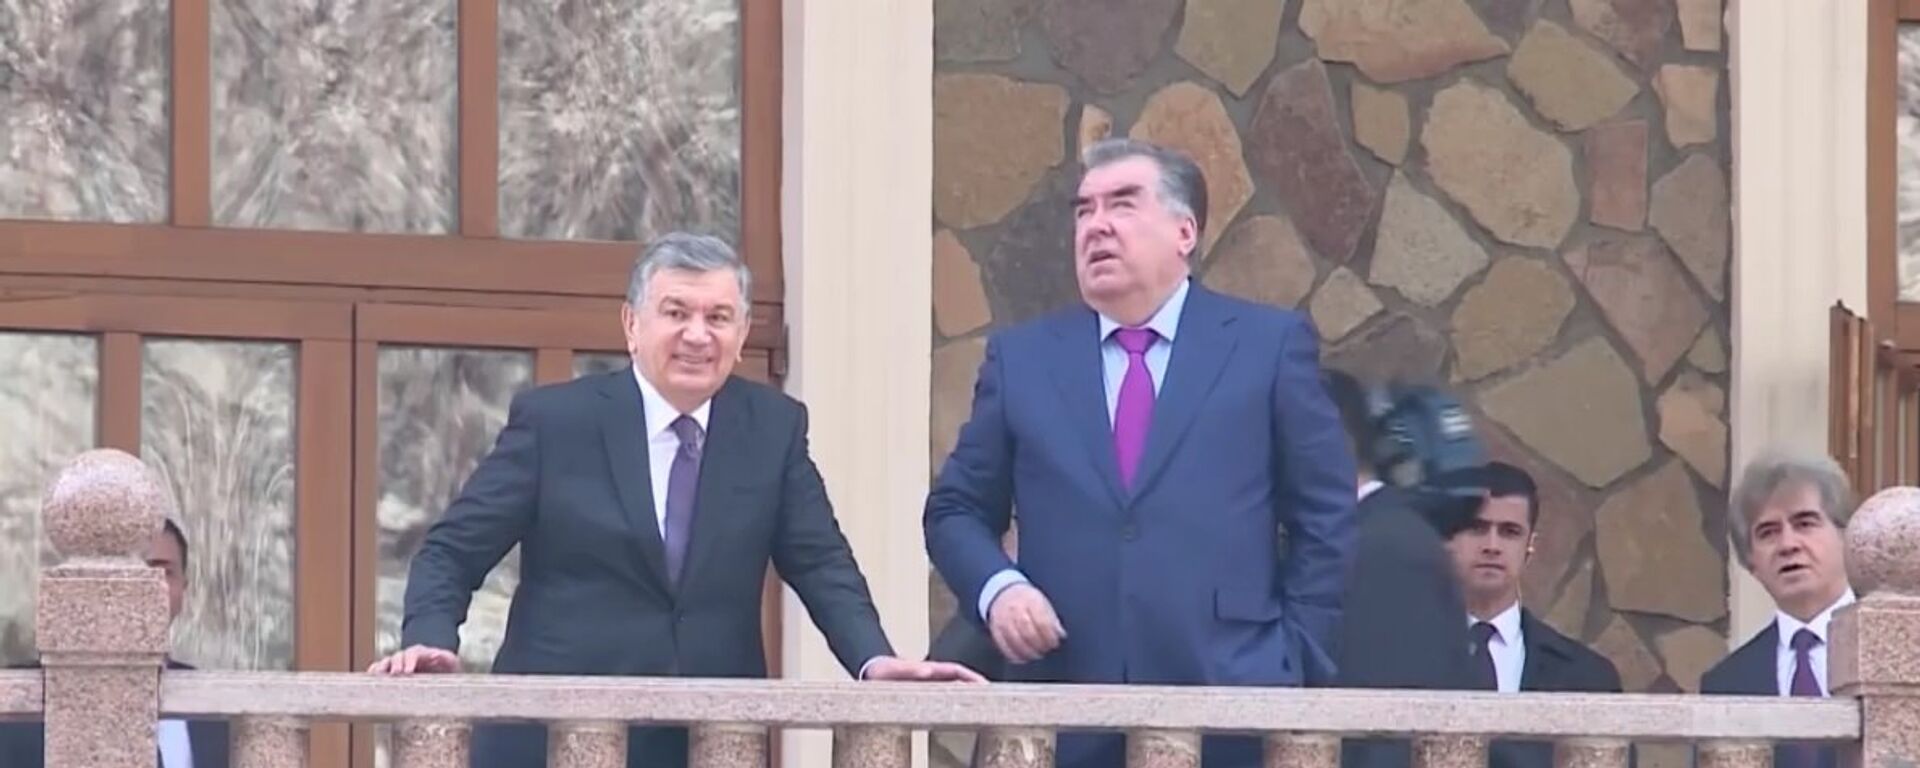 Президенты Узбекистана и Таджикистана - Шавкат Мирзиёев и Эмомали Рахмон - Sputnik Узбекистан, 1920, 10.03.2018